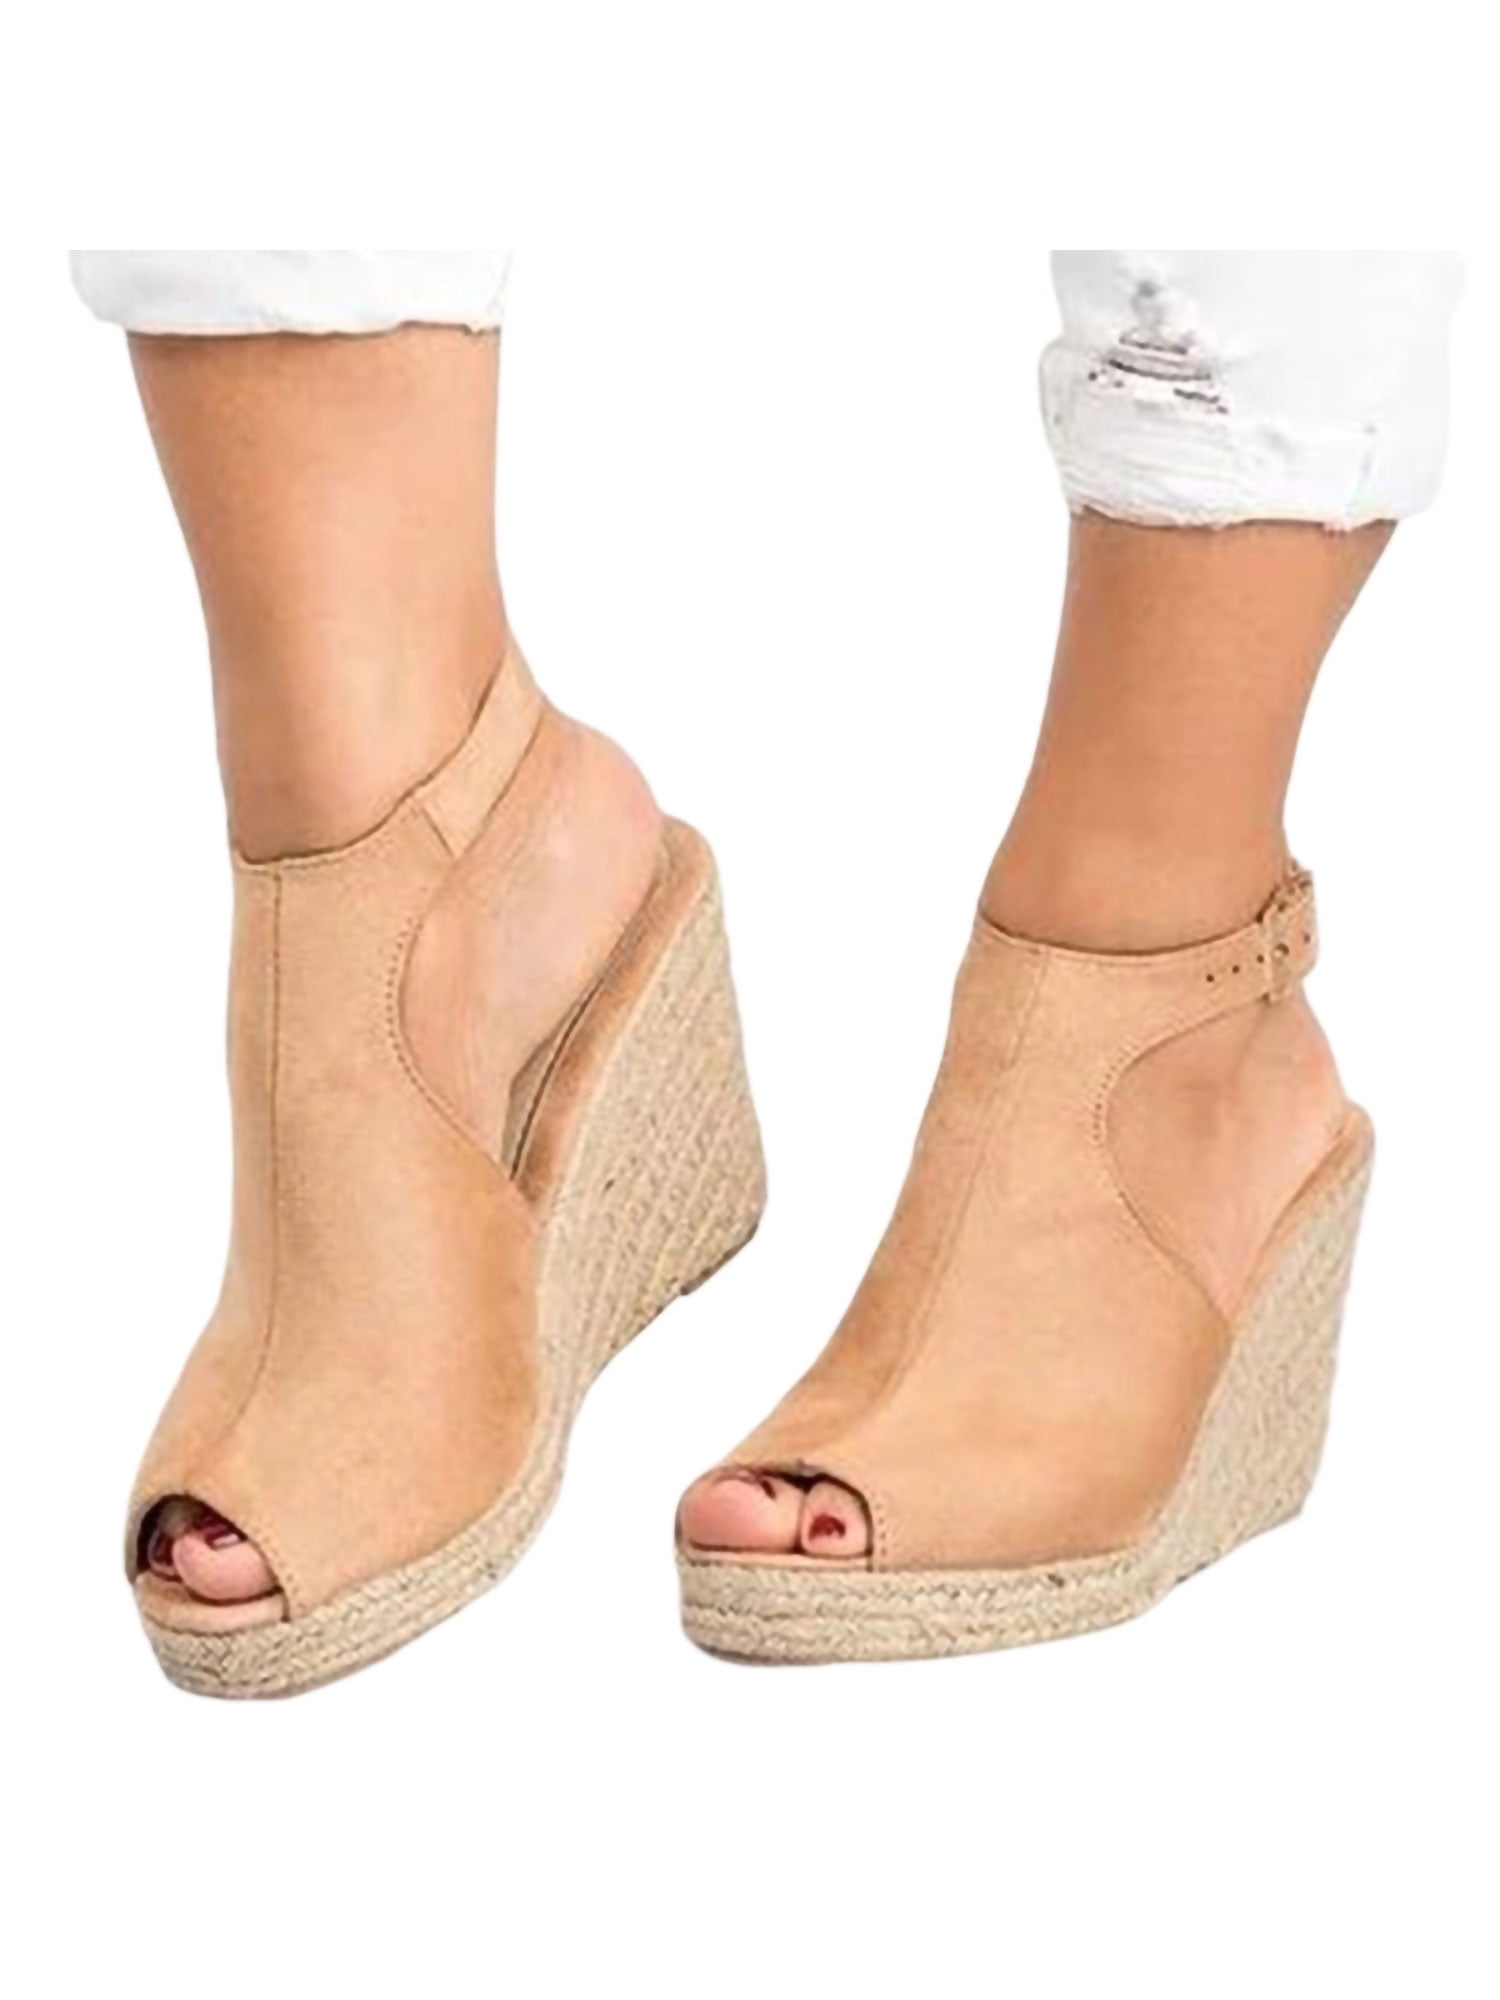 Ladies Wedge Sandals Womens Strap Buckle Summer Espadrilles Ankle Heel Shoes